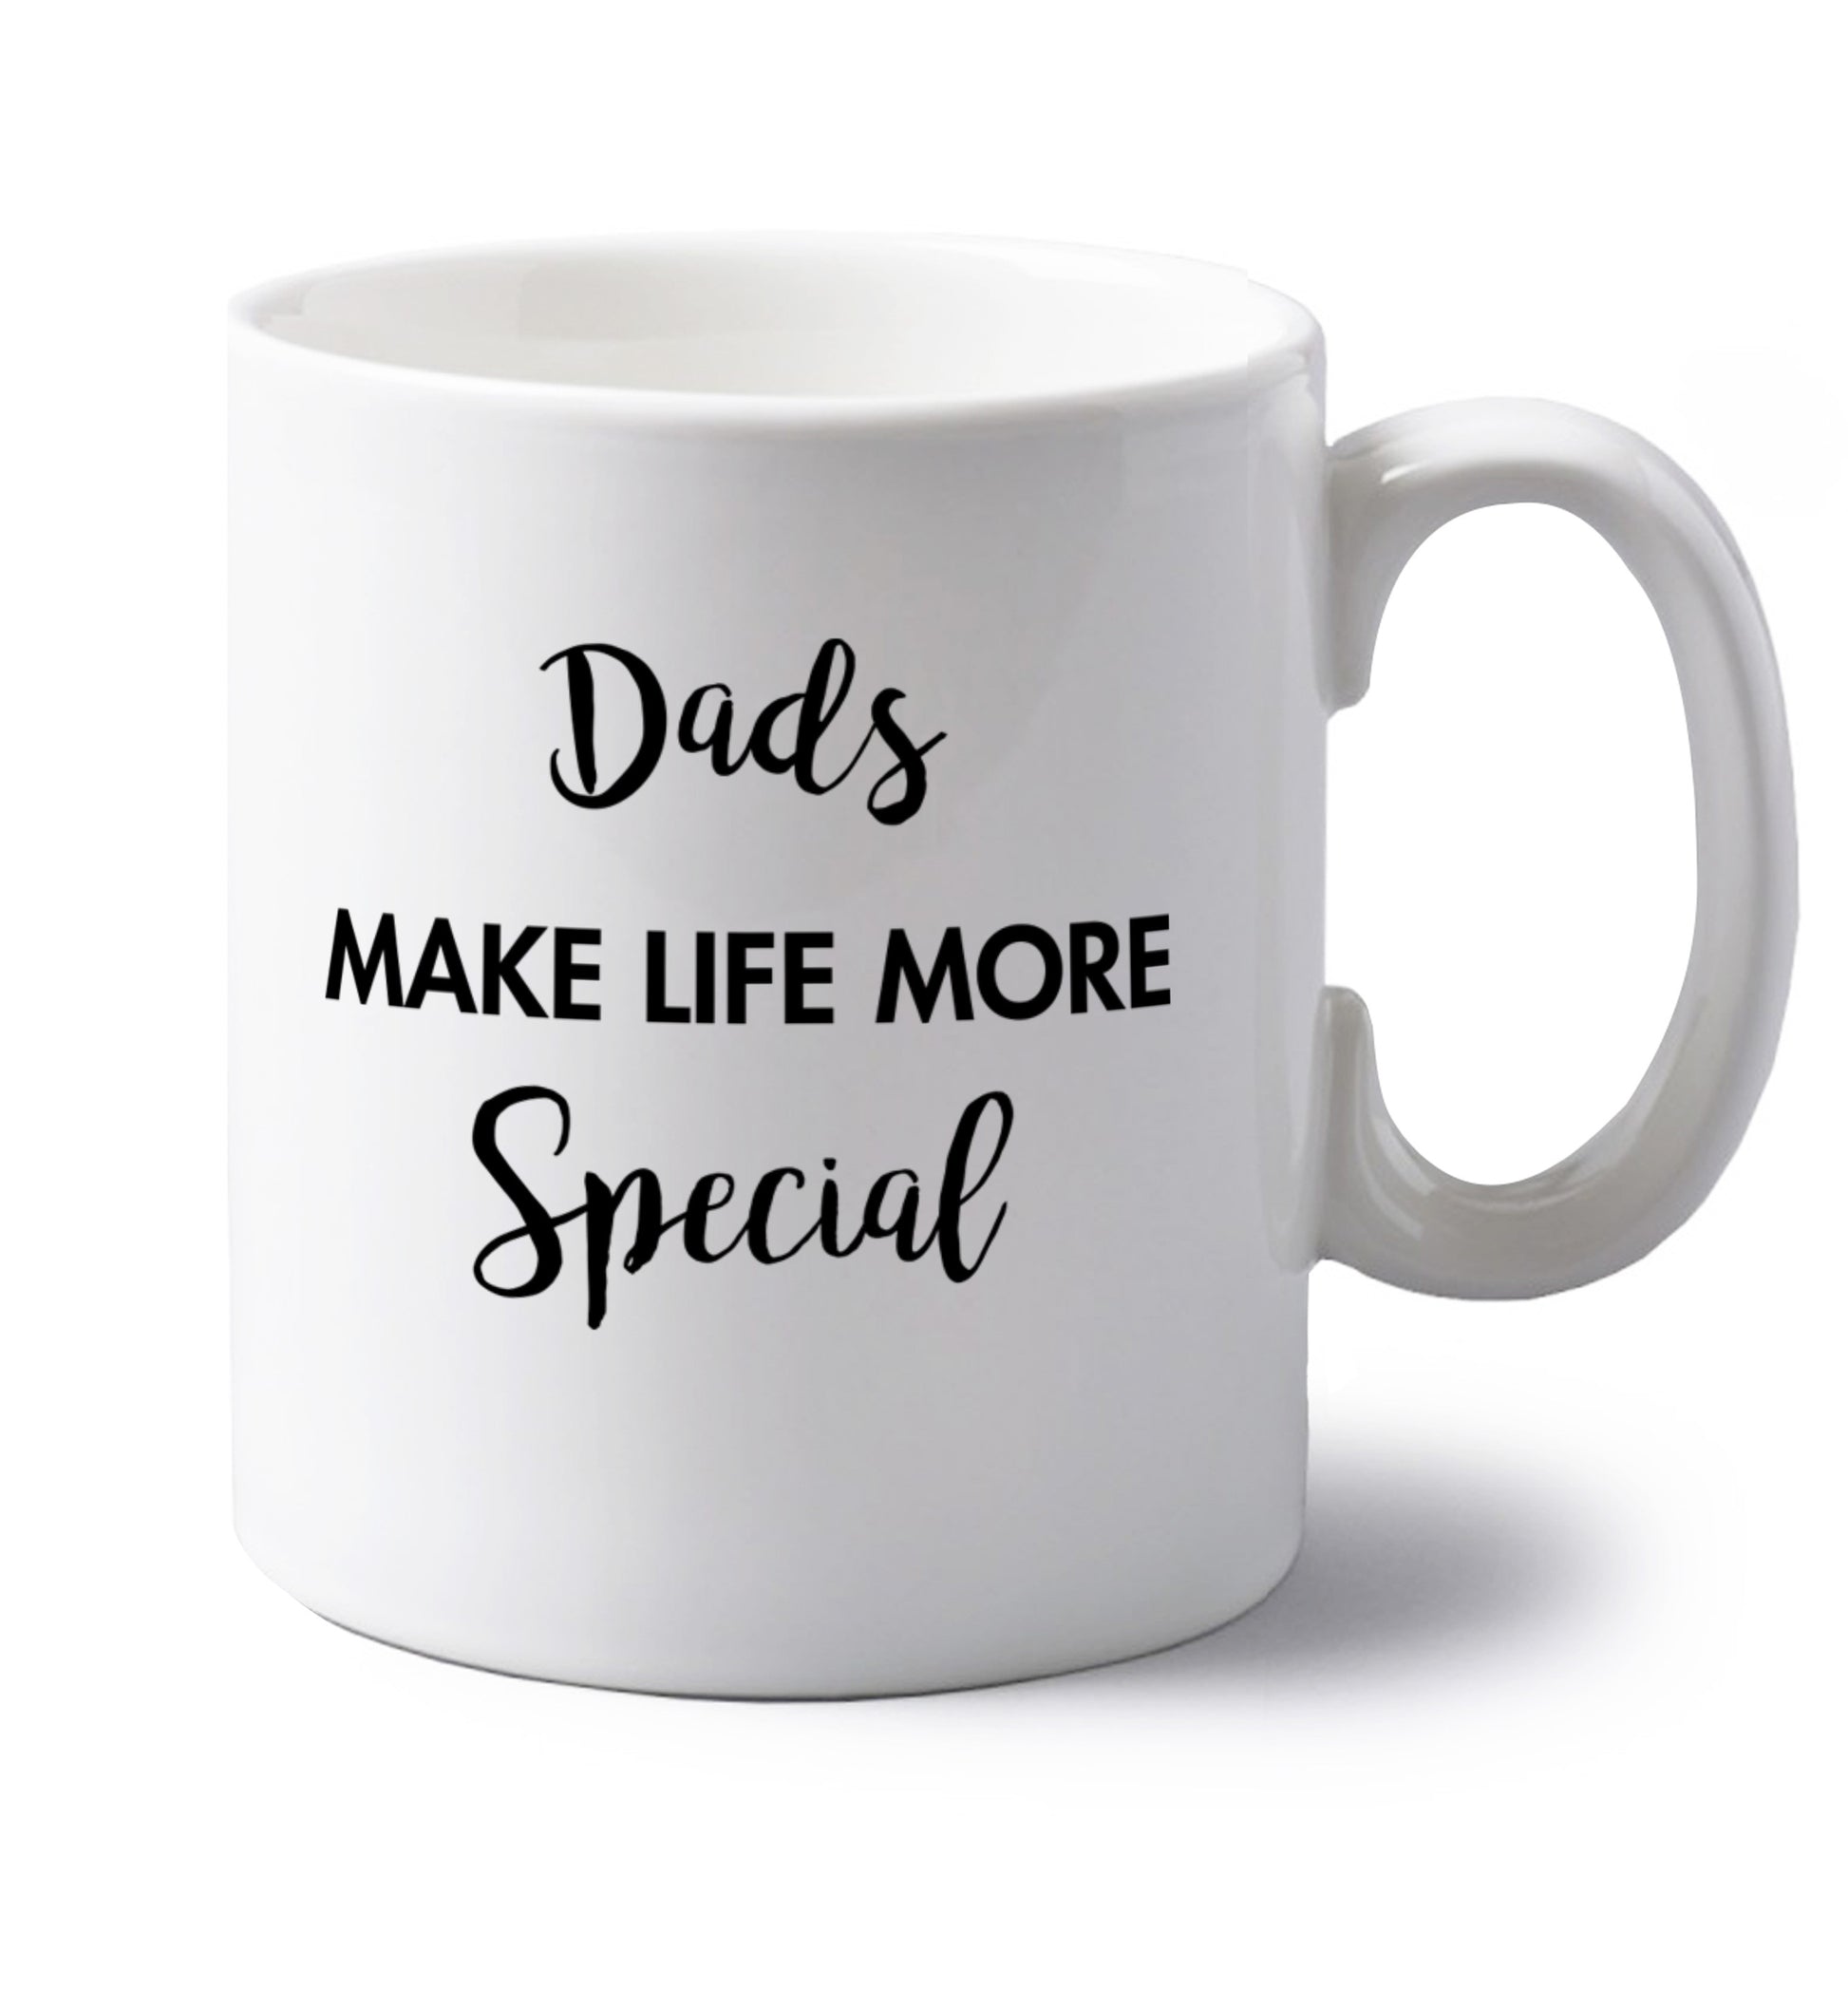 Dads make life more special left handed white ceramic mug 